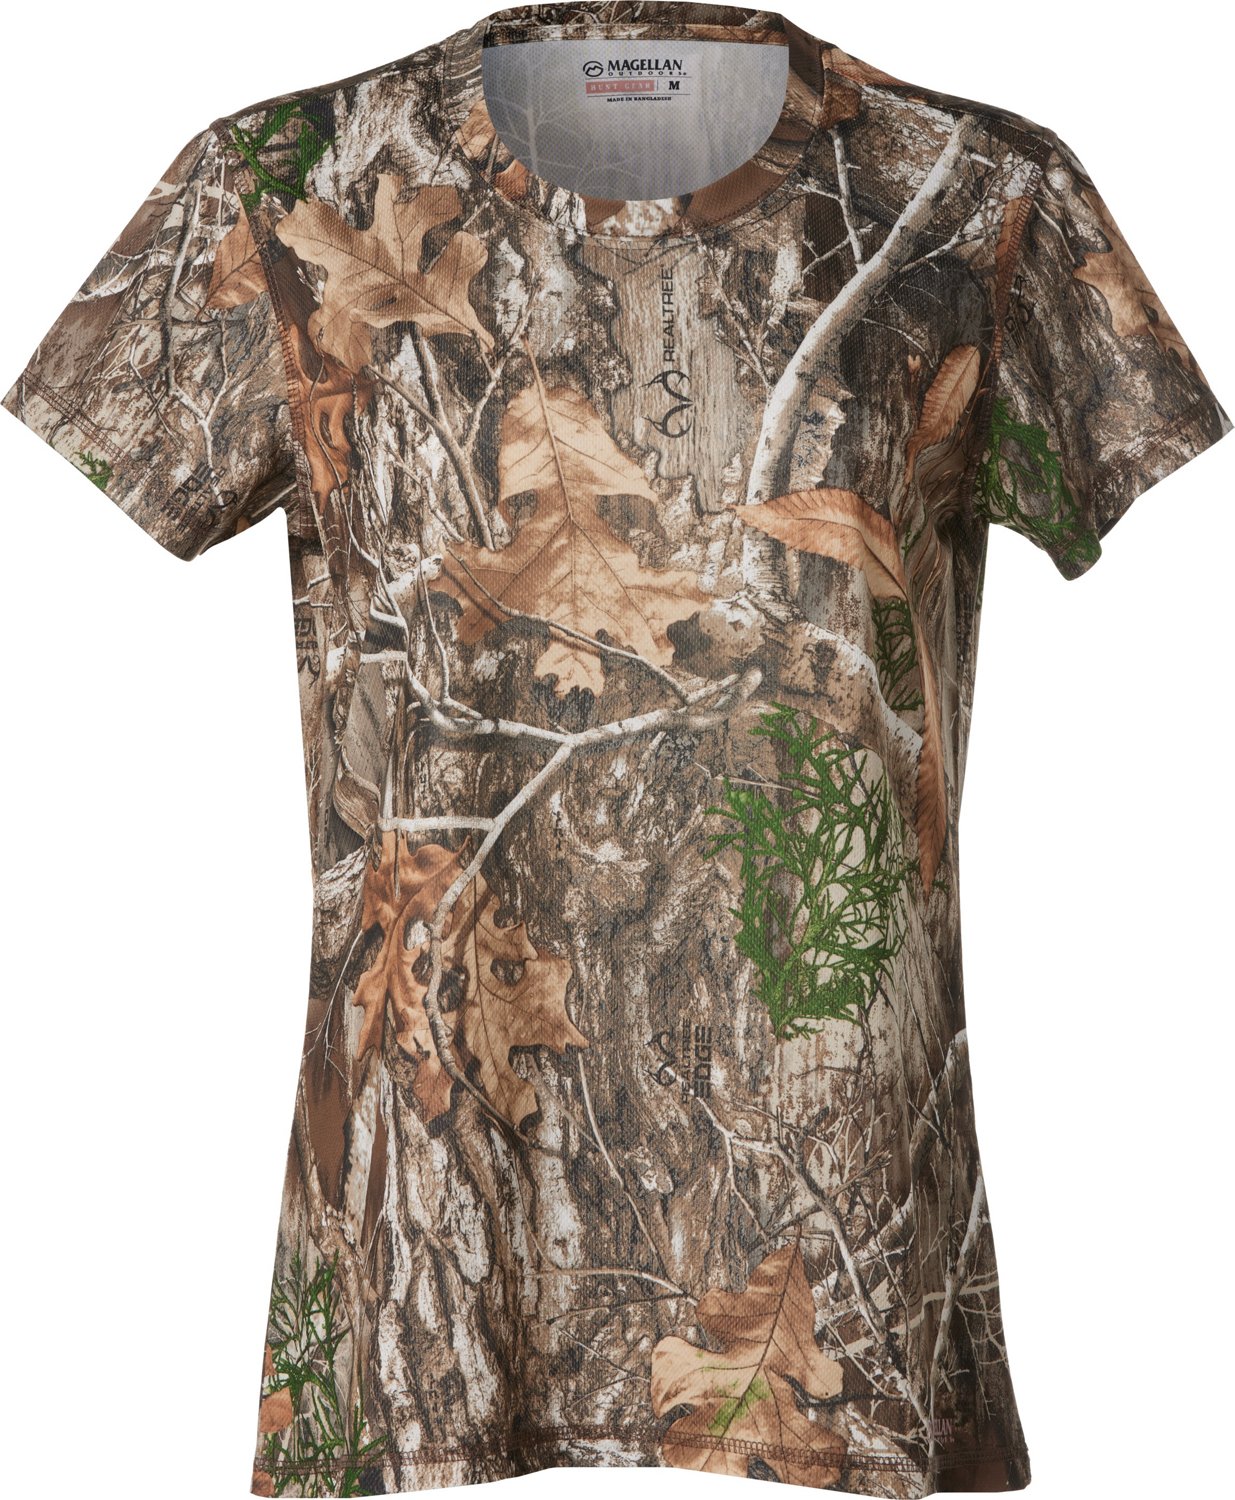 Magellan Men's RealTree Edge Camo Short Sleeve T-shirt Camouflage Hunting M L XL 